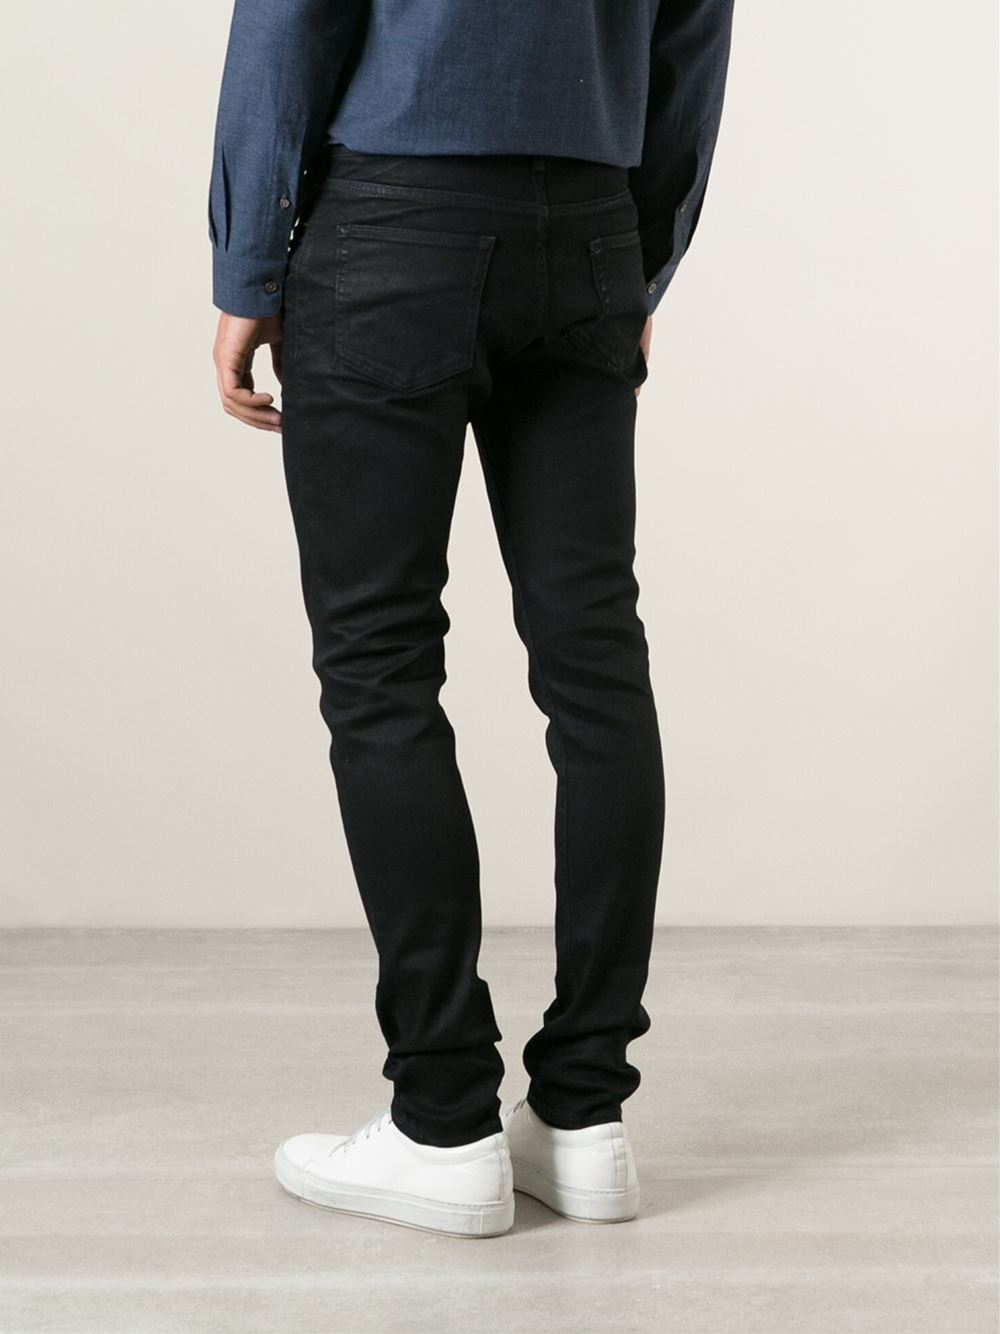 Acne Studios 'Thin Dawn' Jeans in Black for Men - Lyst